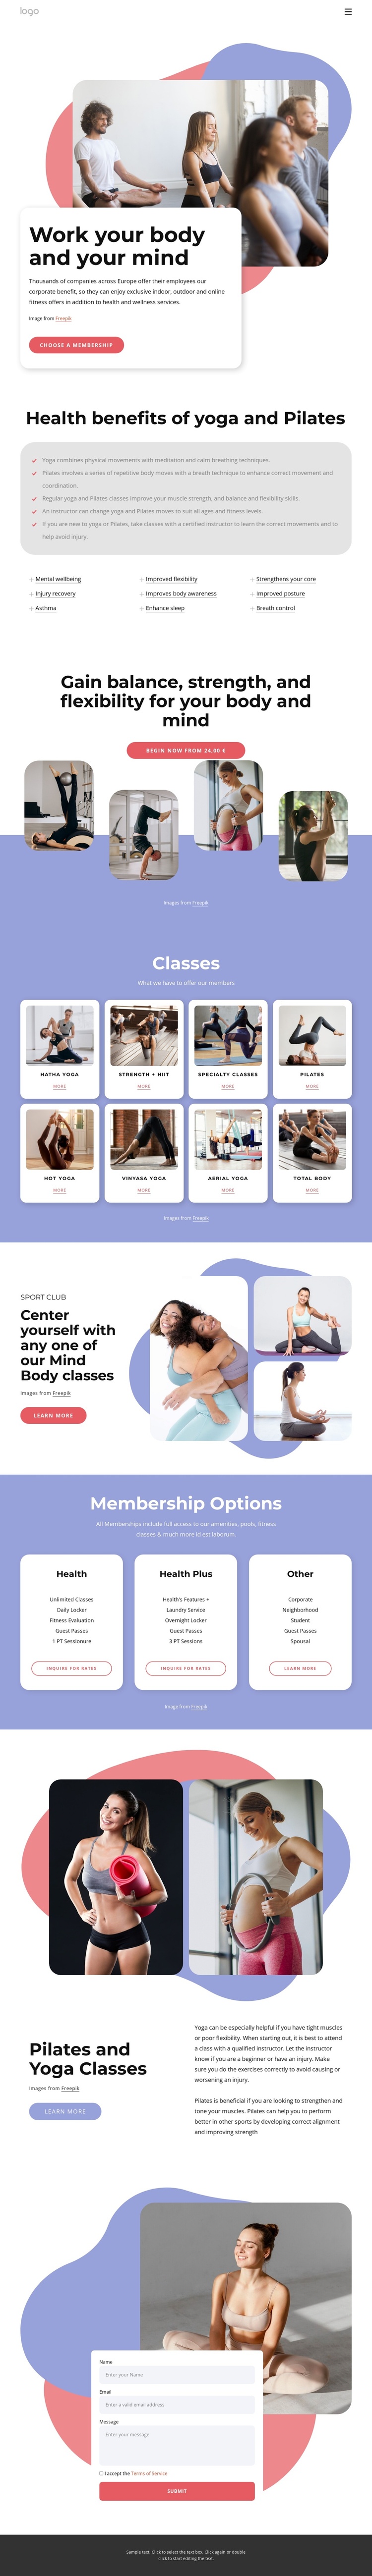 Pilates and yoga classes Joomla Template